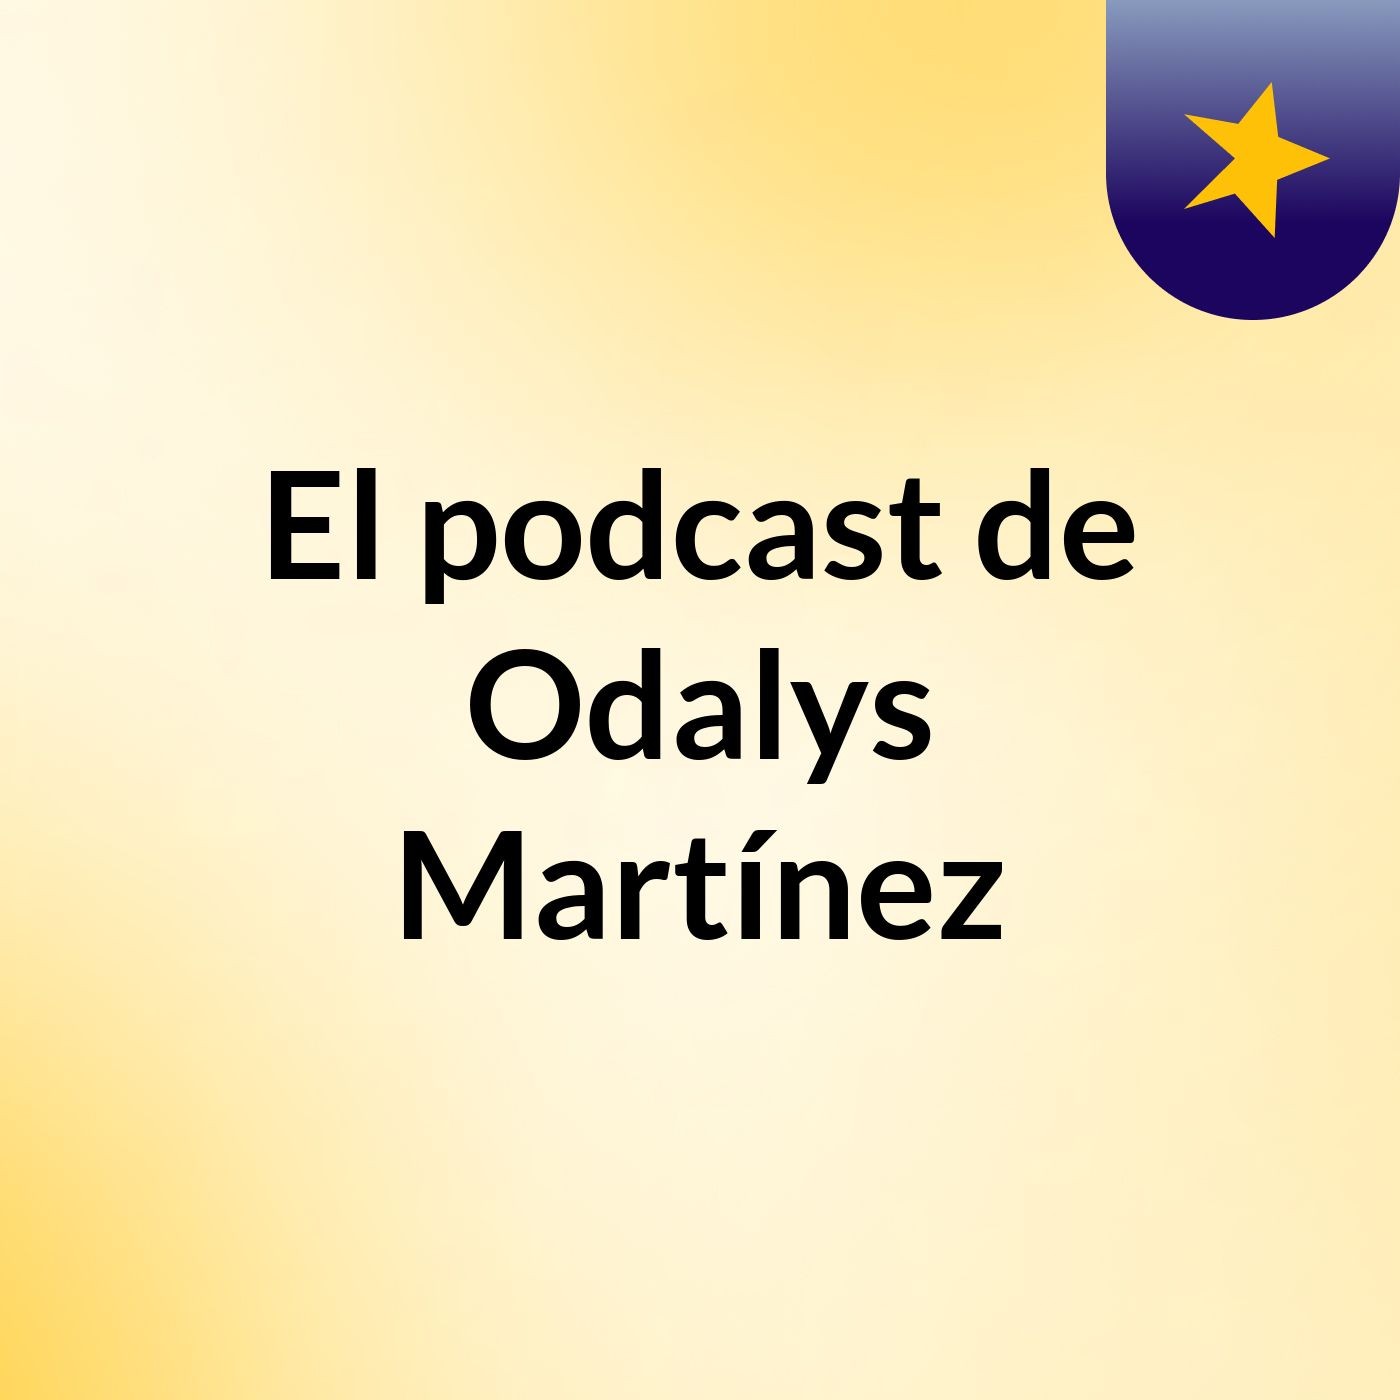 El podcast de Odalys Martínez